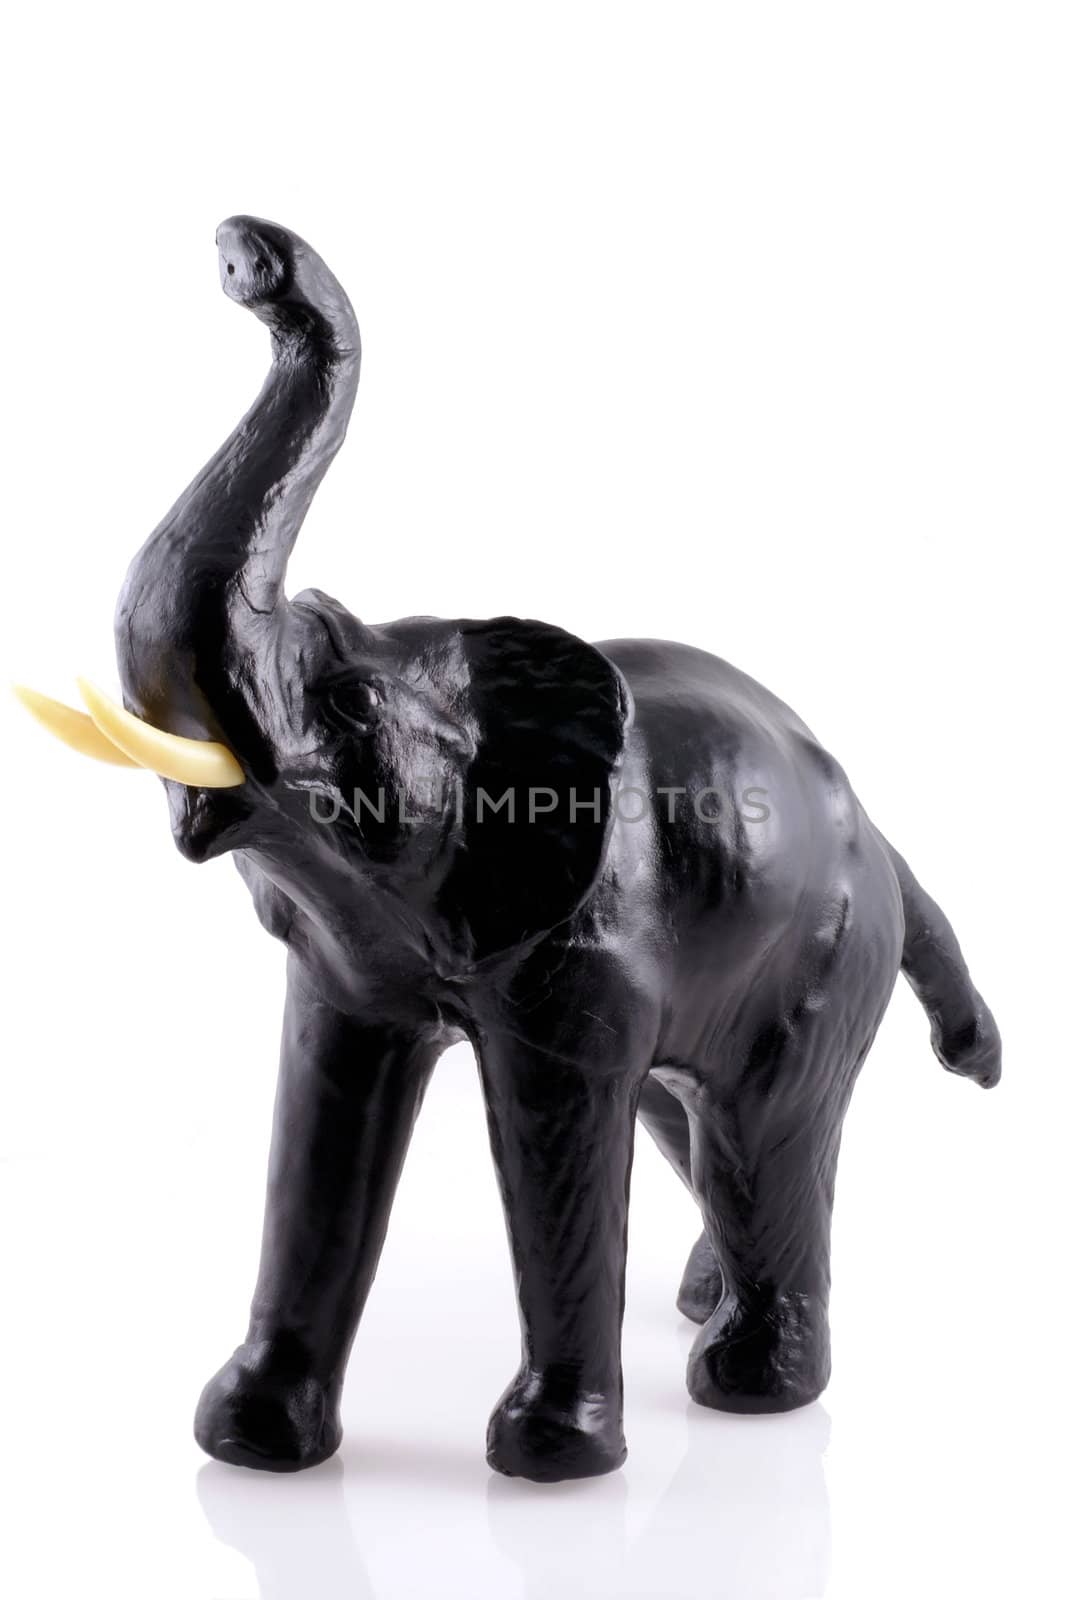 Little black wooden elephant, isolated on white.